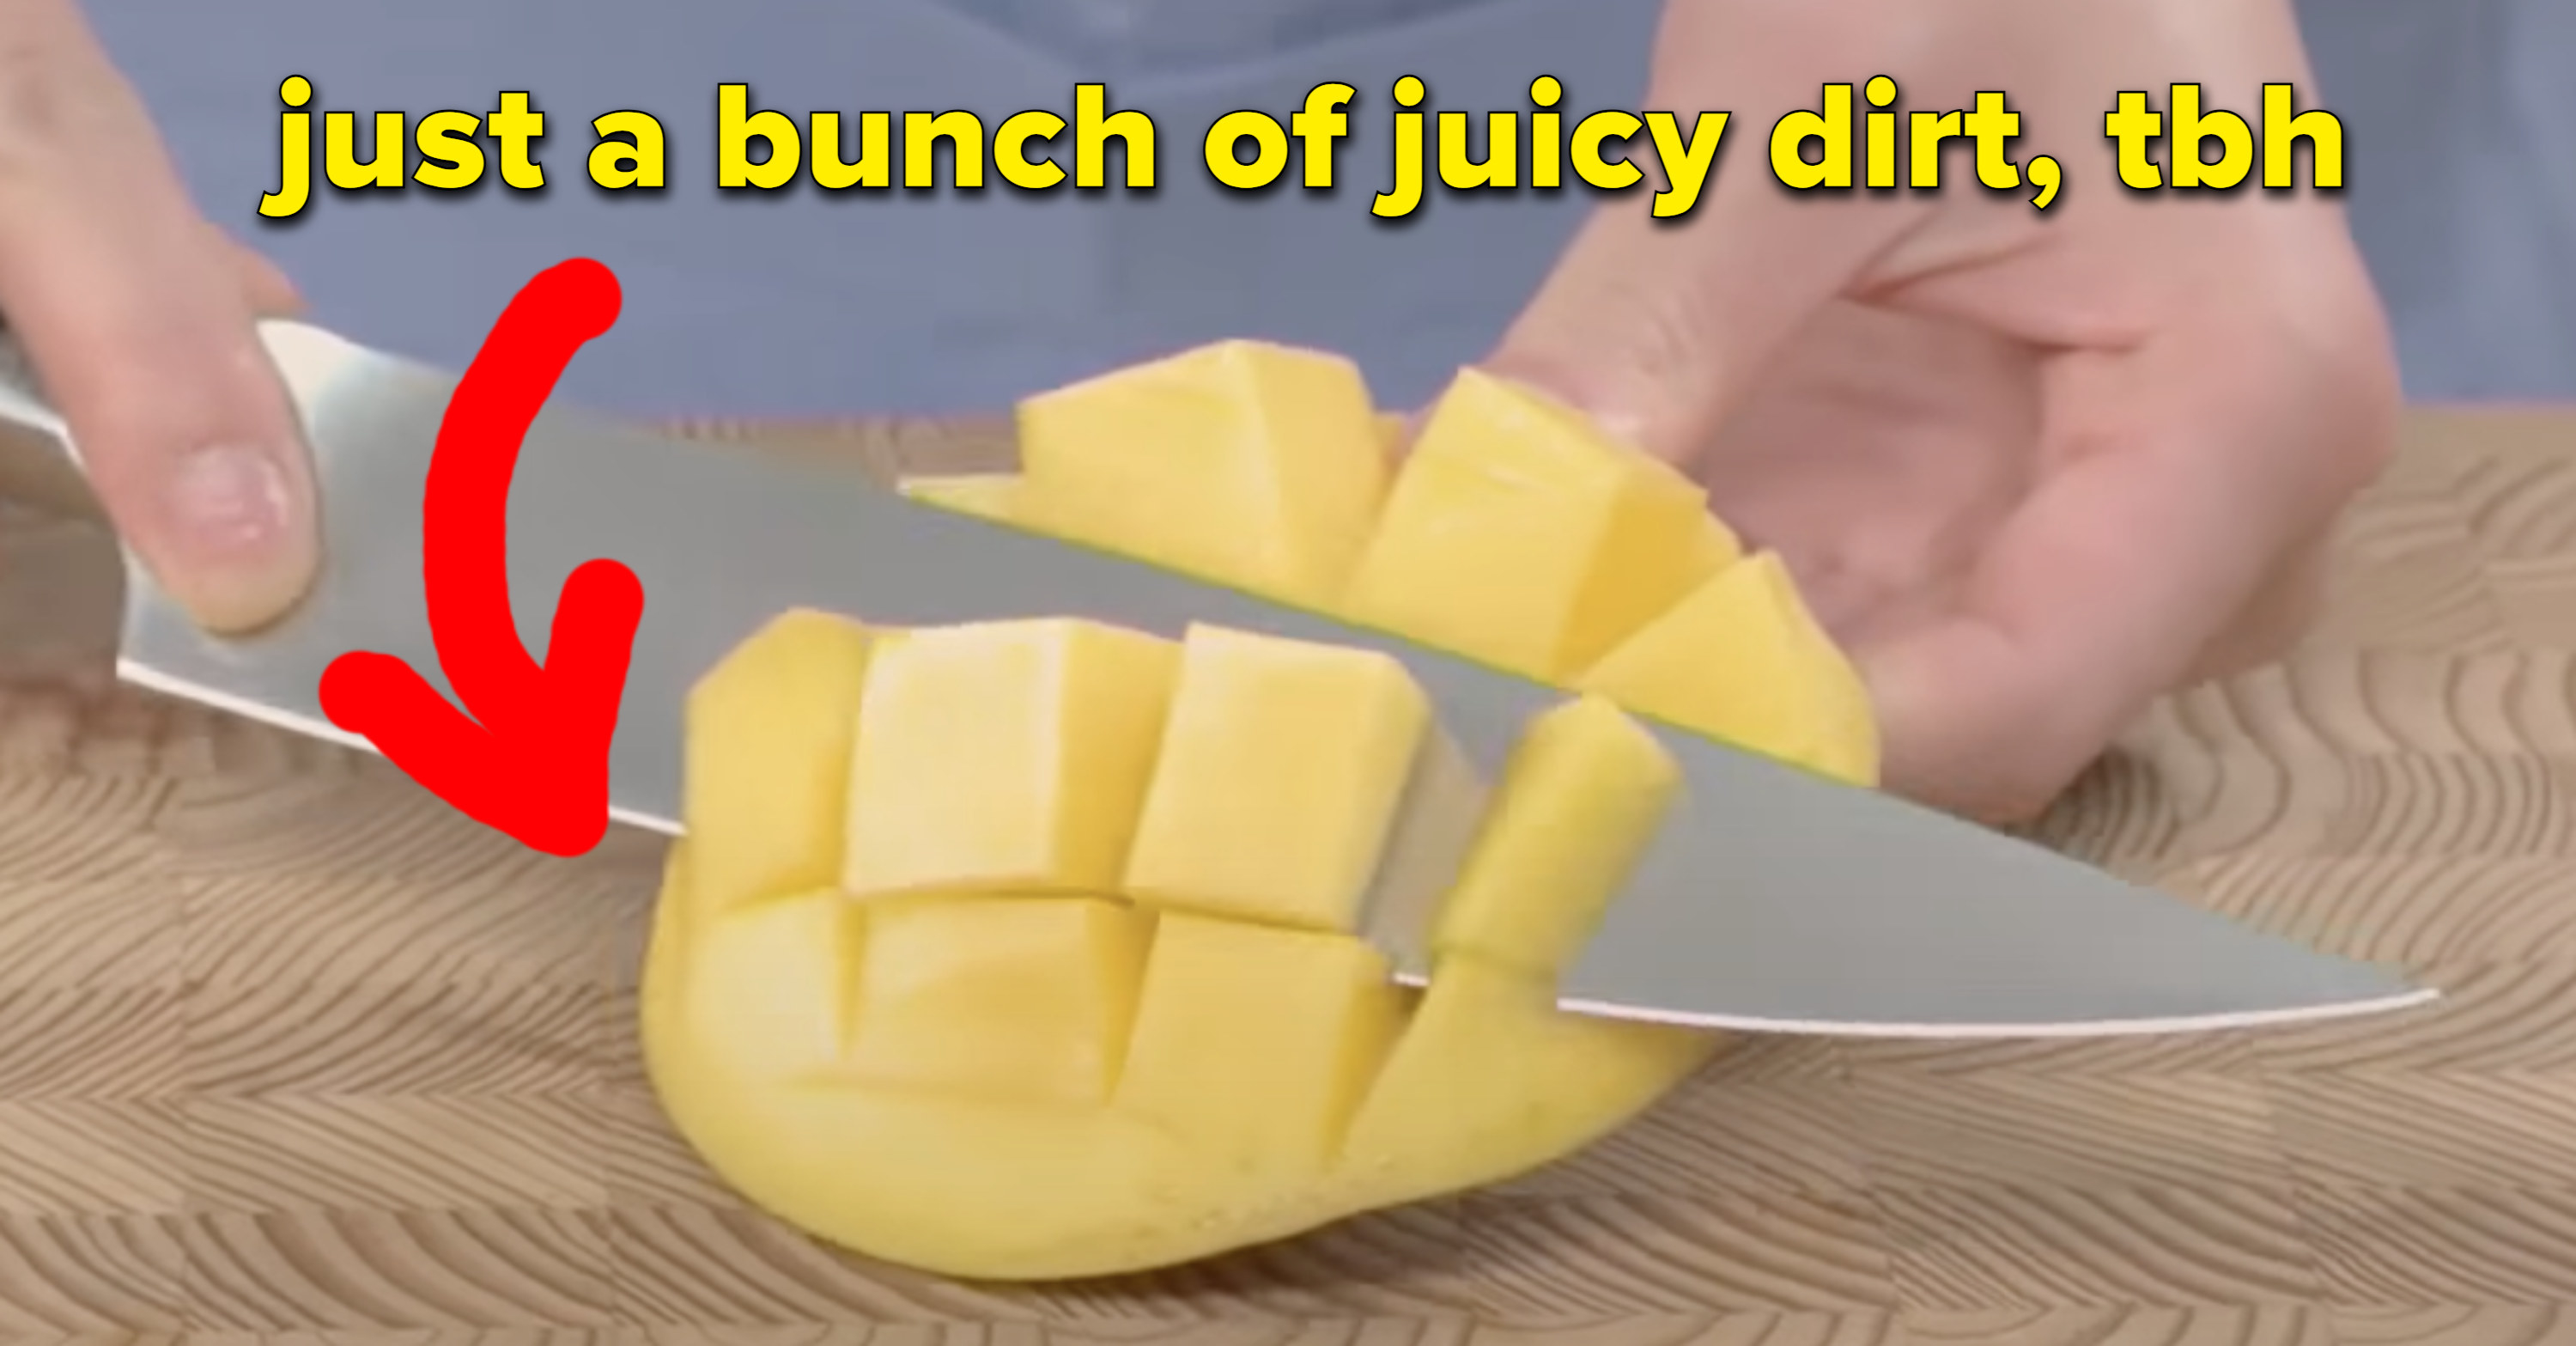 Someone cutting into a mango